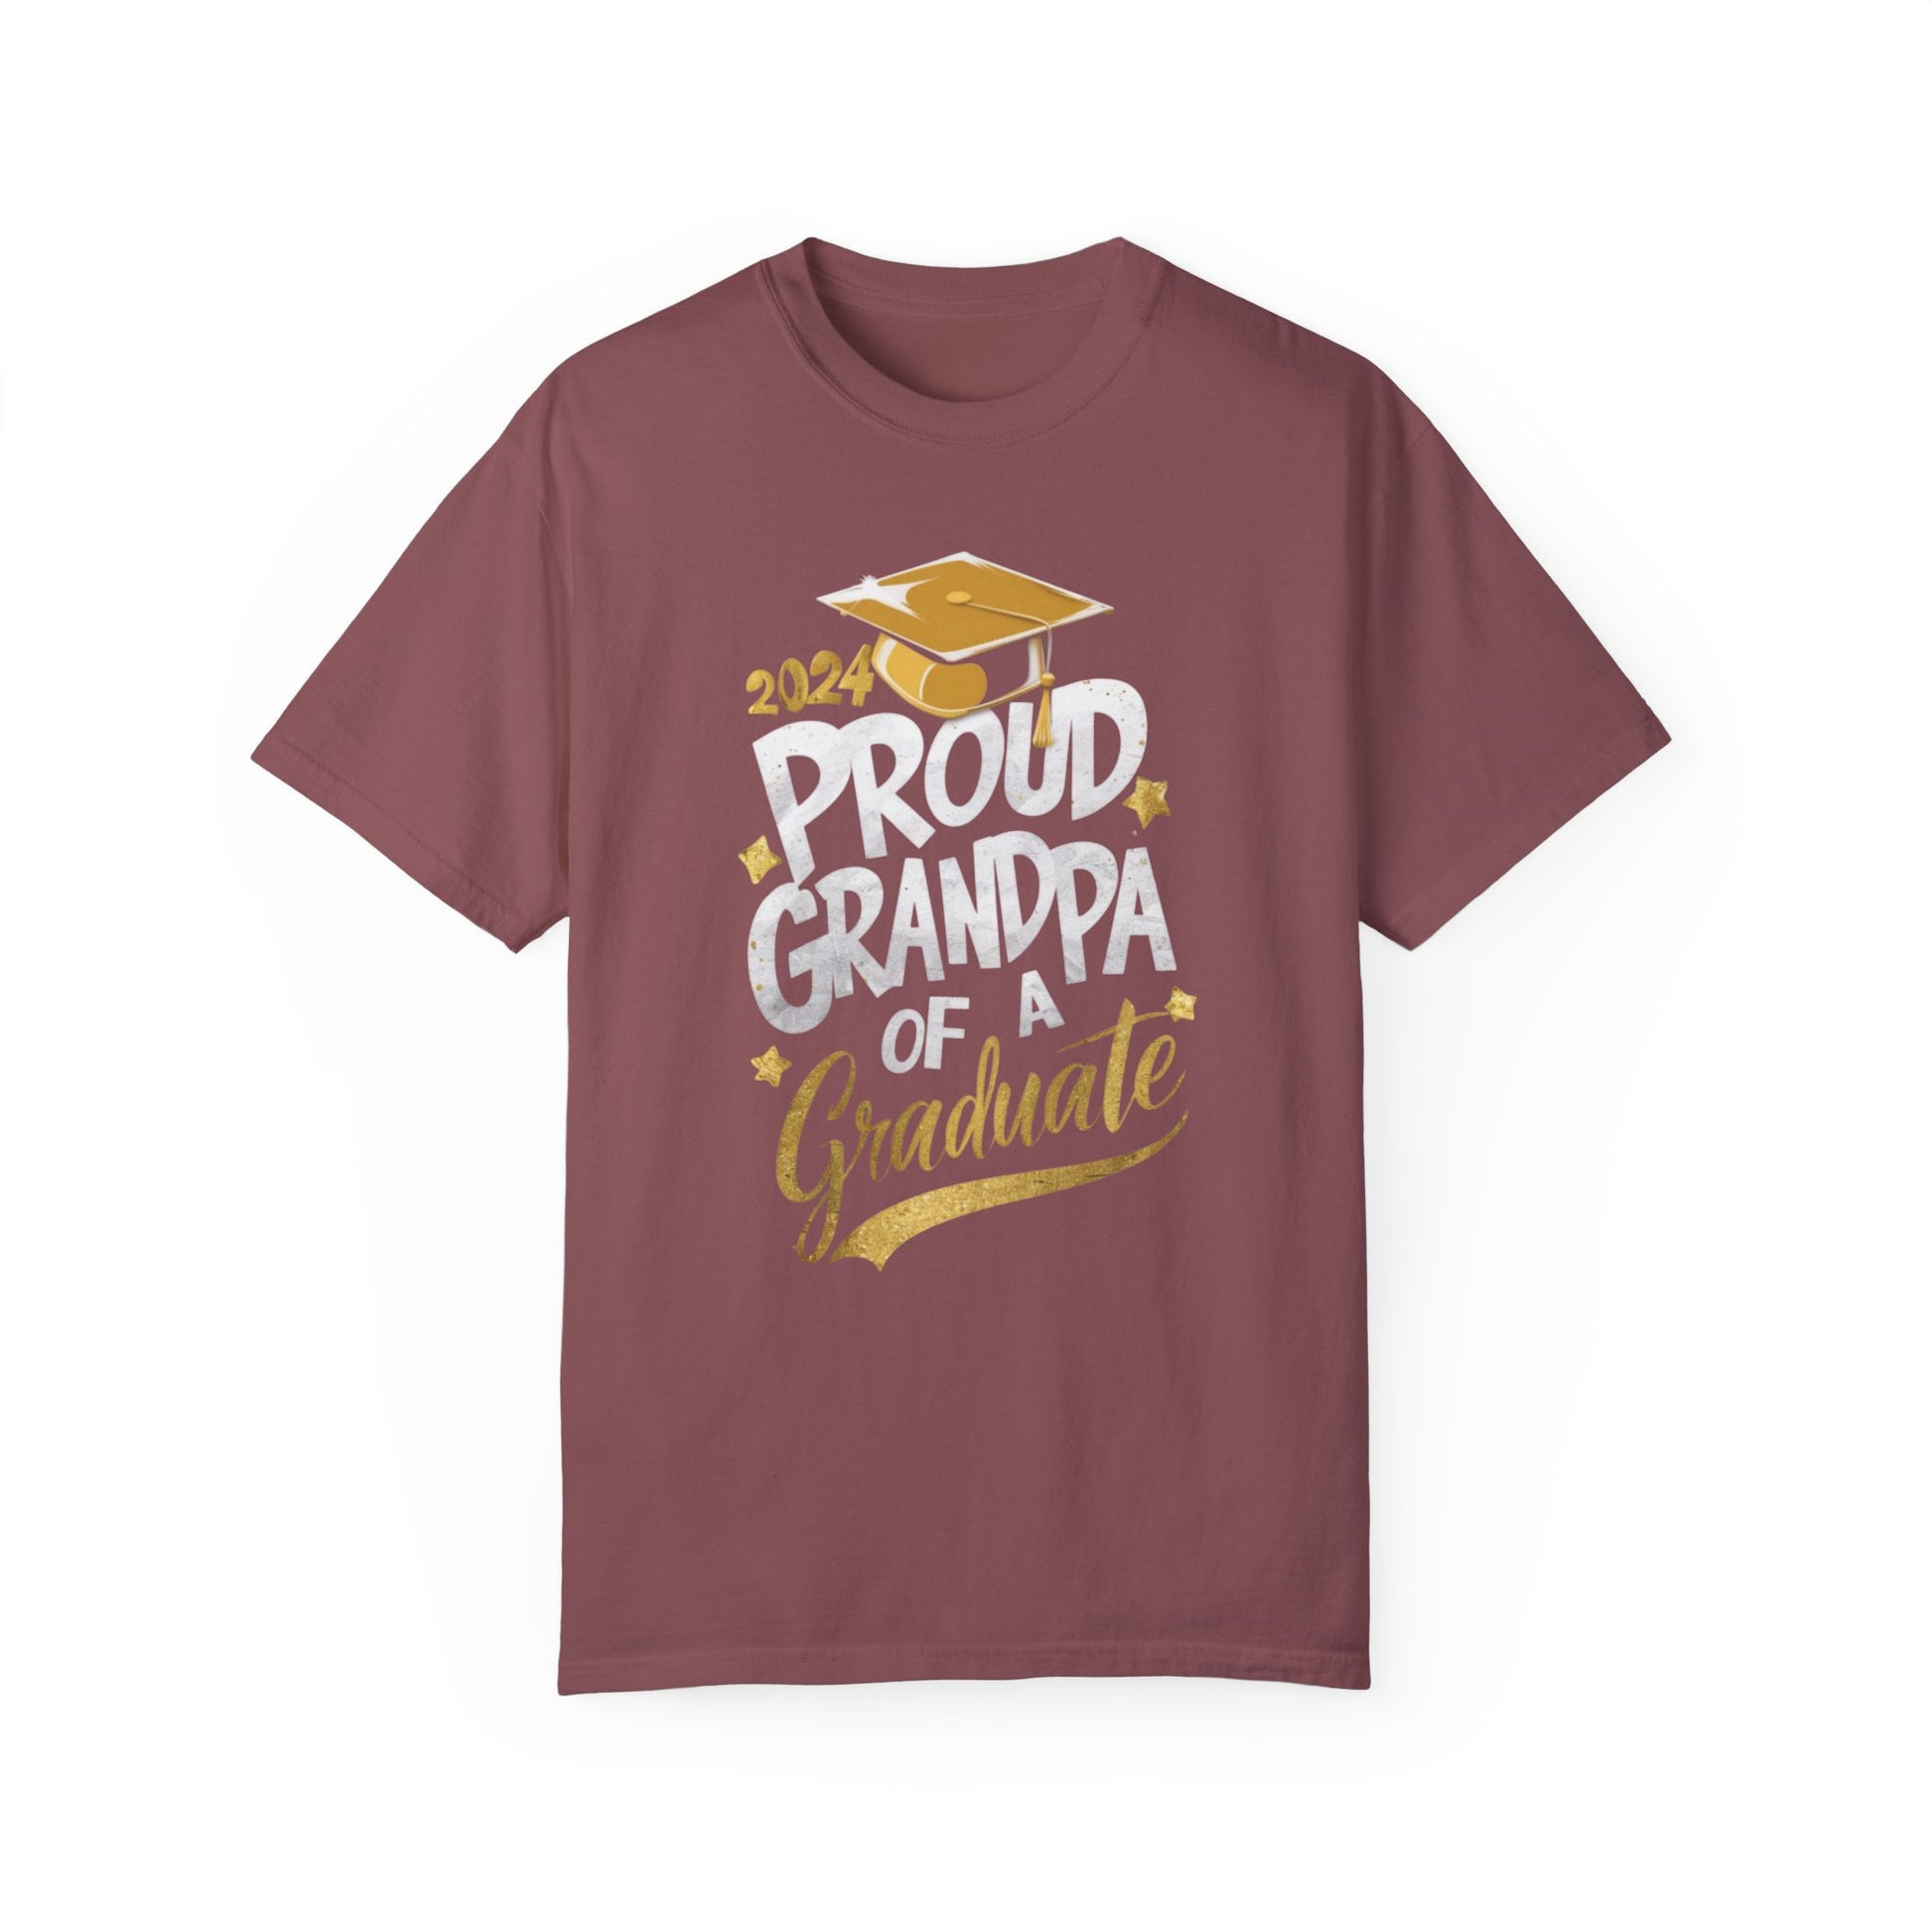 Proud Grandpa of a 2024 Graduate Unisex Garment-dyed T-shirt Cotton Funny Humorous Graphic Soft Premium Unisex Men Women Brick T-shirt Birthday Gift-5